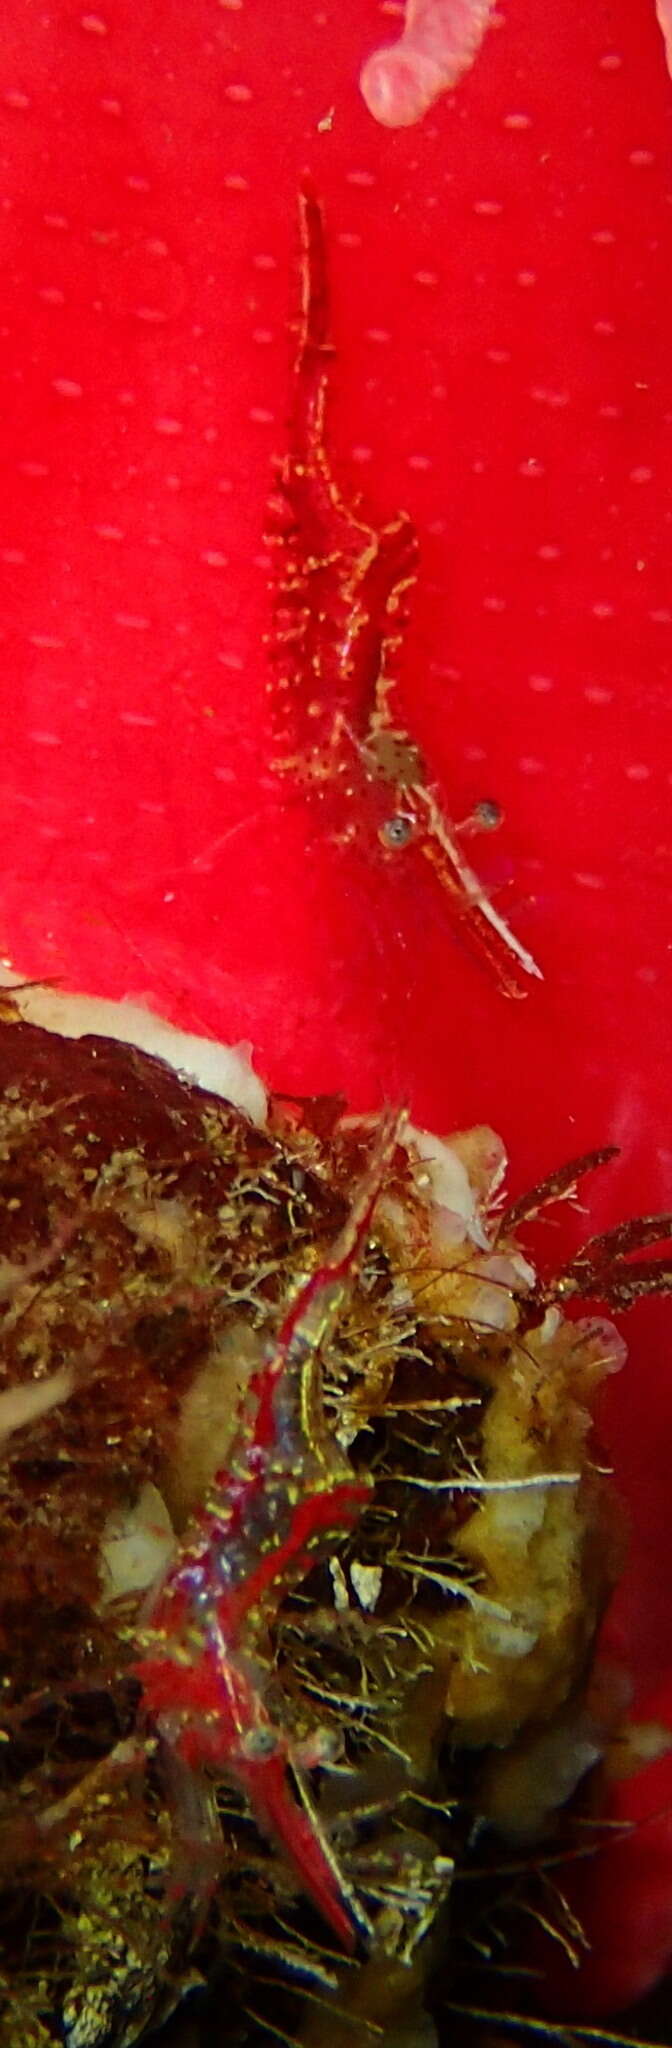 Image of Kincaid coastal shrimp